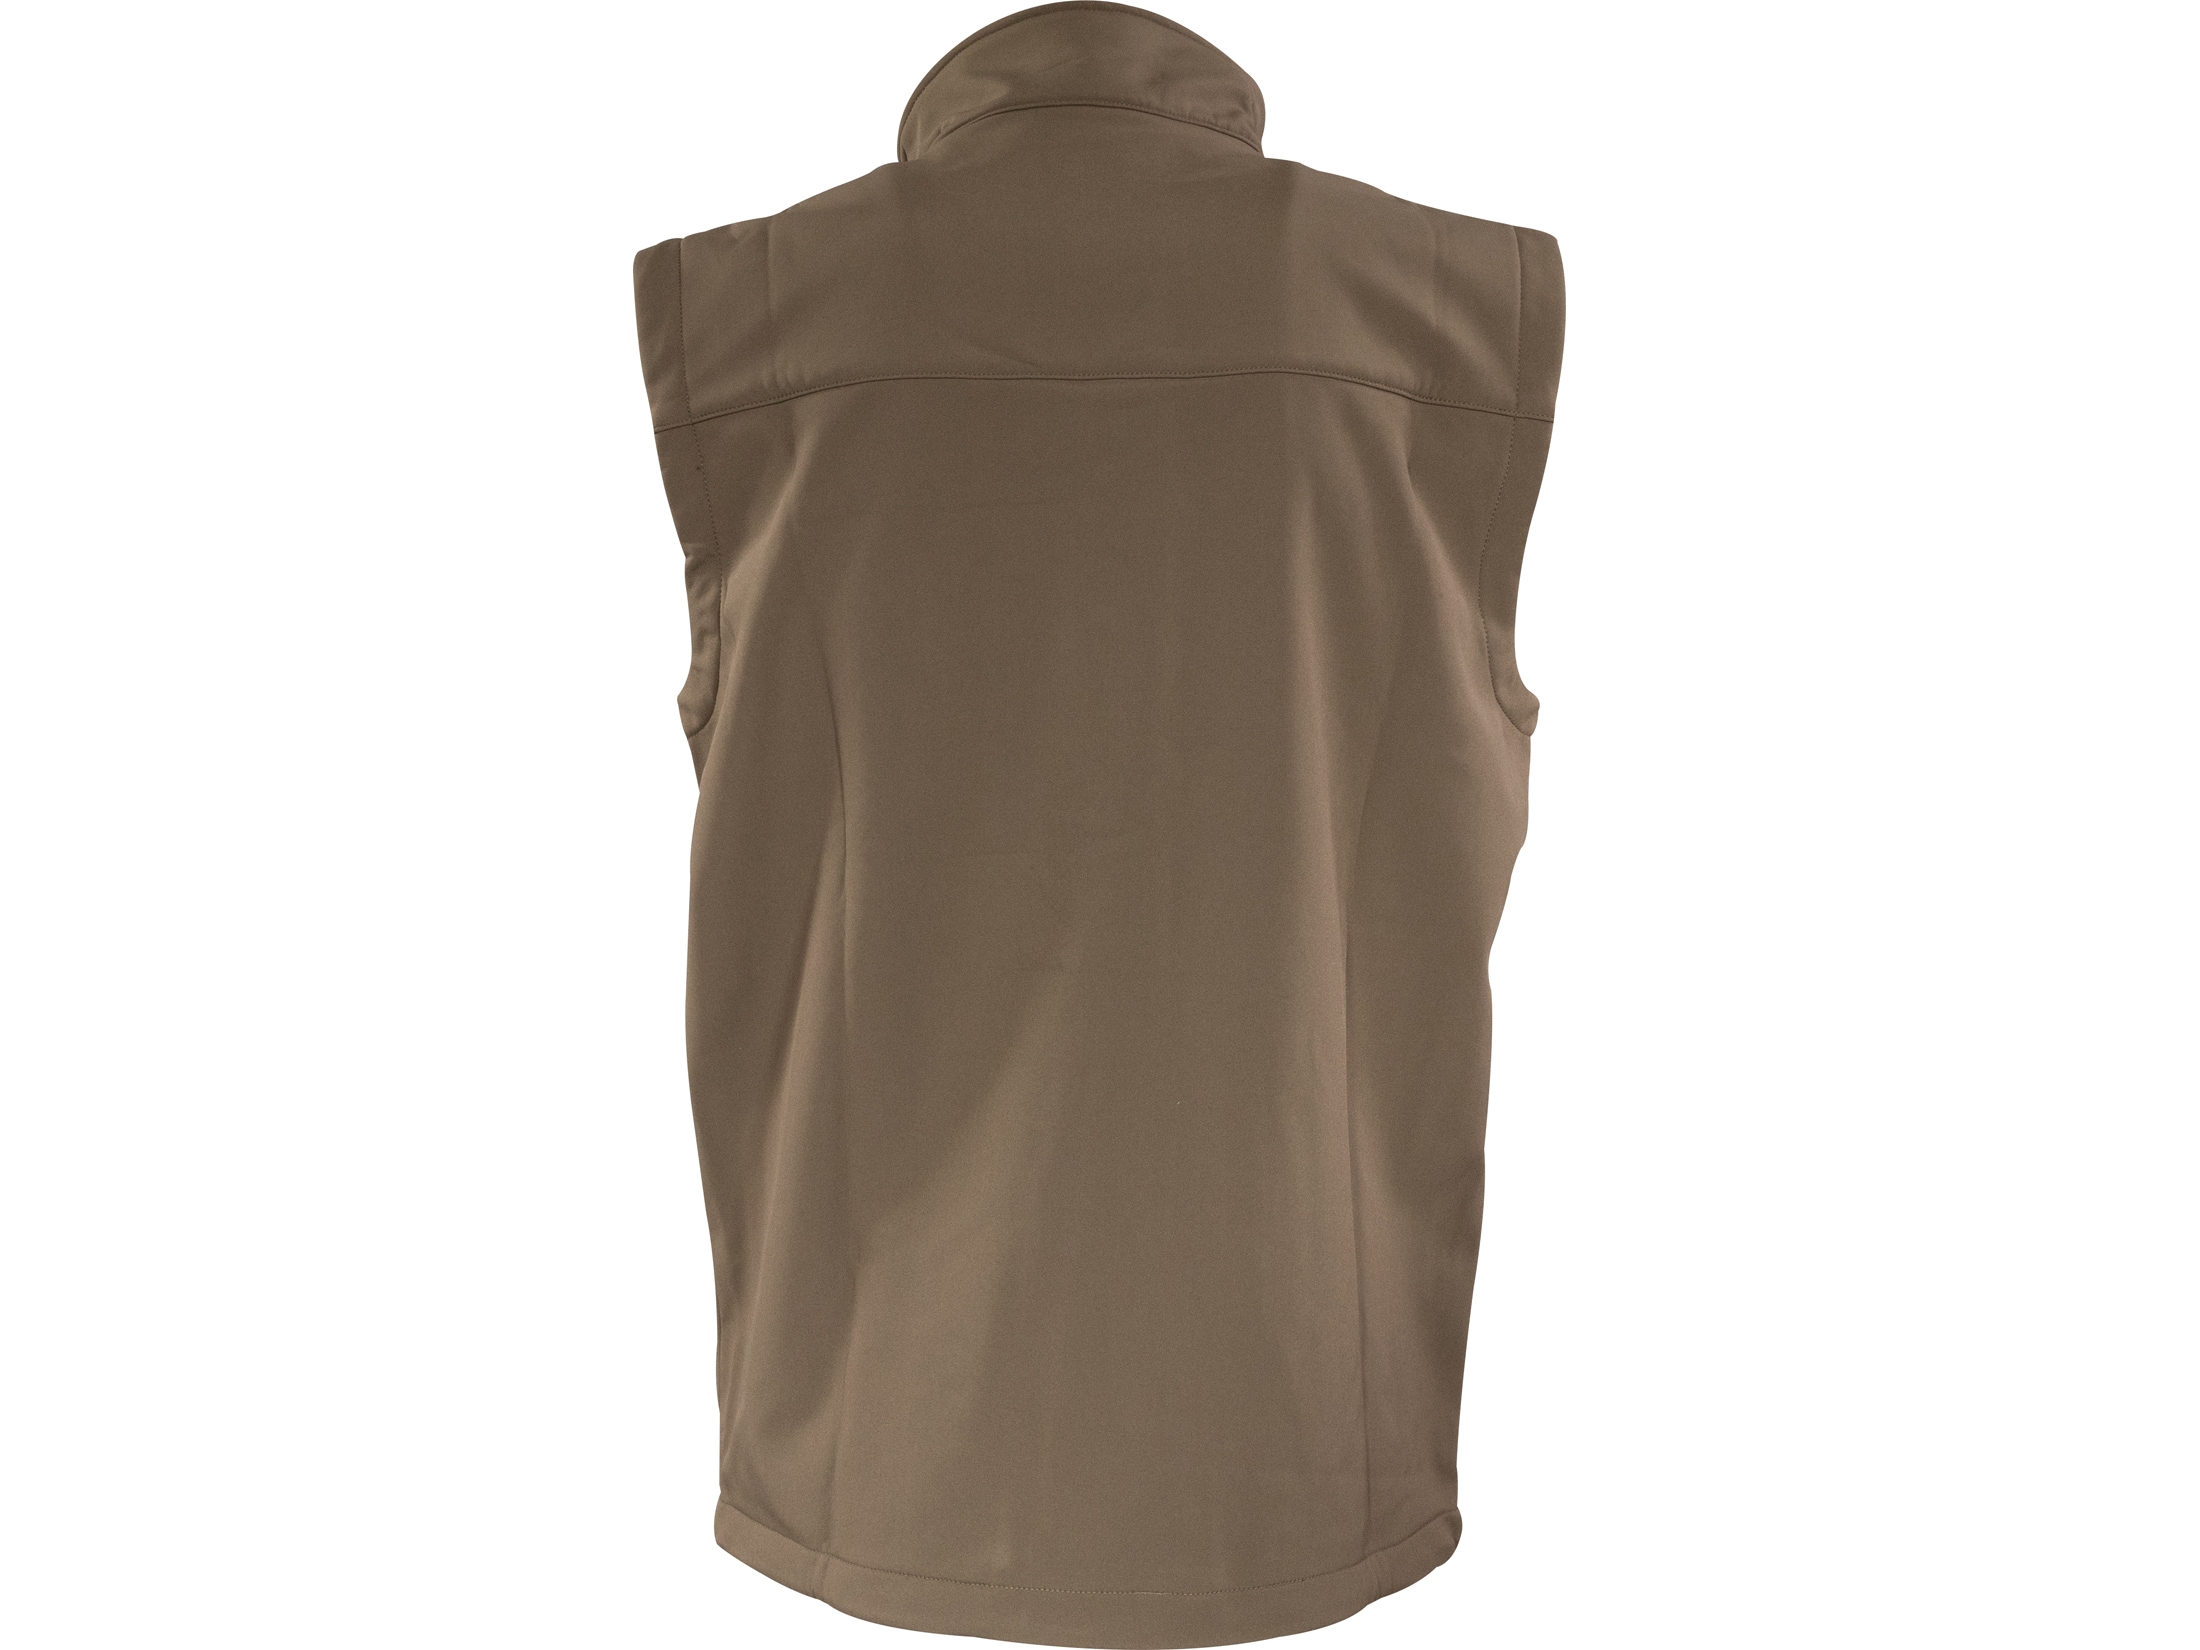  LVLONG Men's Utility Vest Multi-Pockets Outdoor Work  Photography Sleeveless Jacket Quick Dry Breathable Fishing Vest,Khaki,Small  : Clothing, Shoes & Jewelry